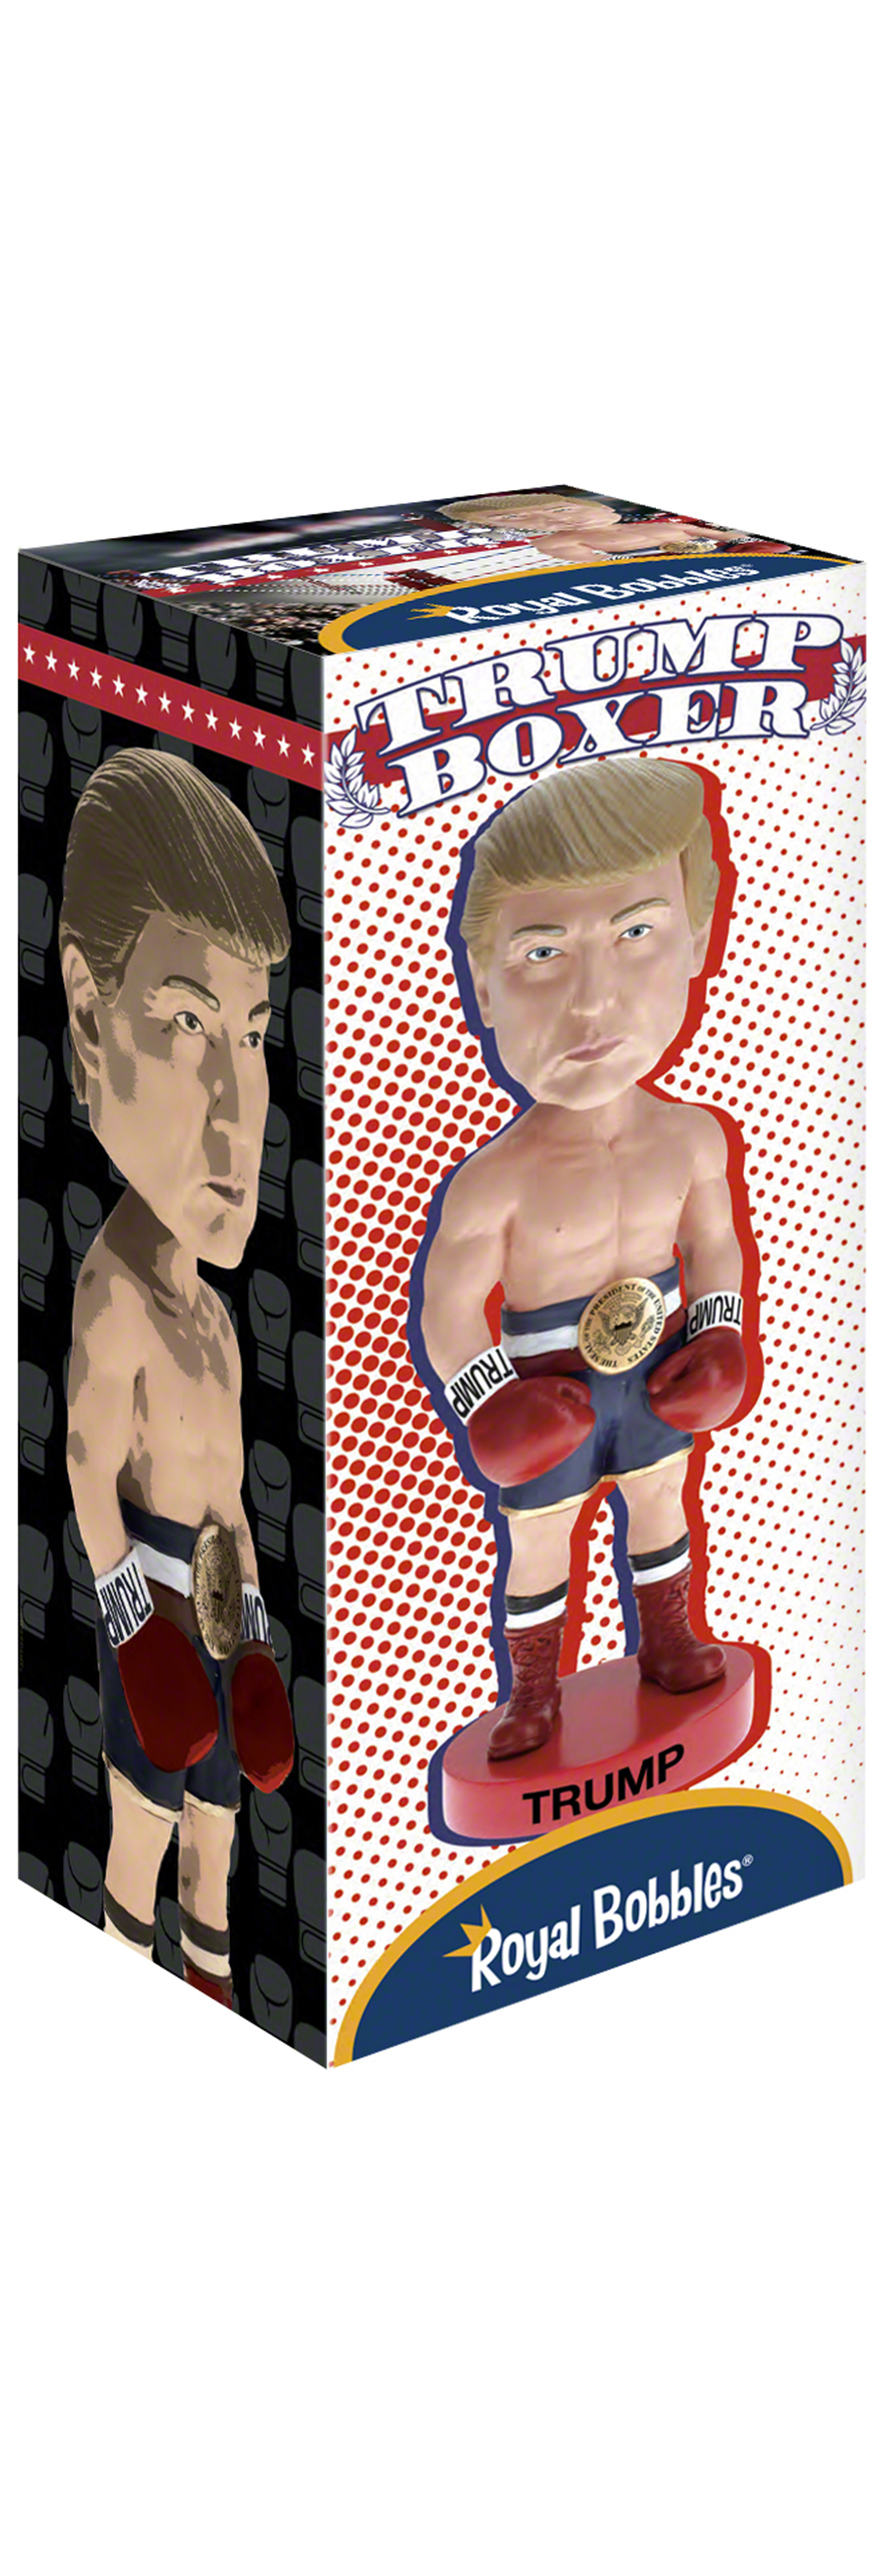 Royal Bobbles Donald Trump Boxer Bobblehead Unique Serial Number Premium Polyresin Lifelike Figure Exquisite Detail 